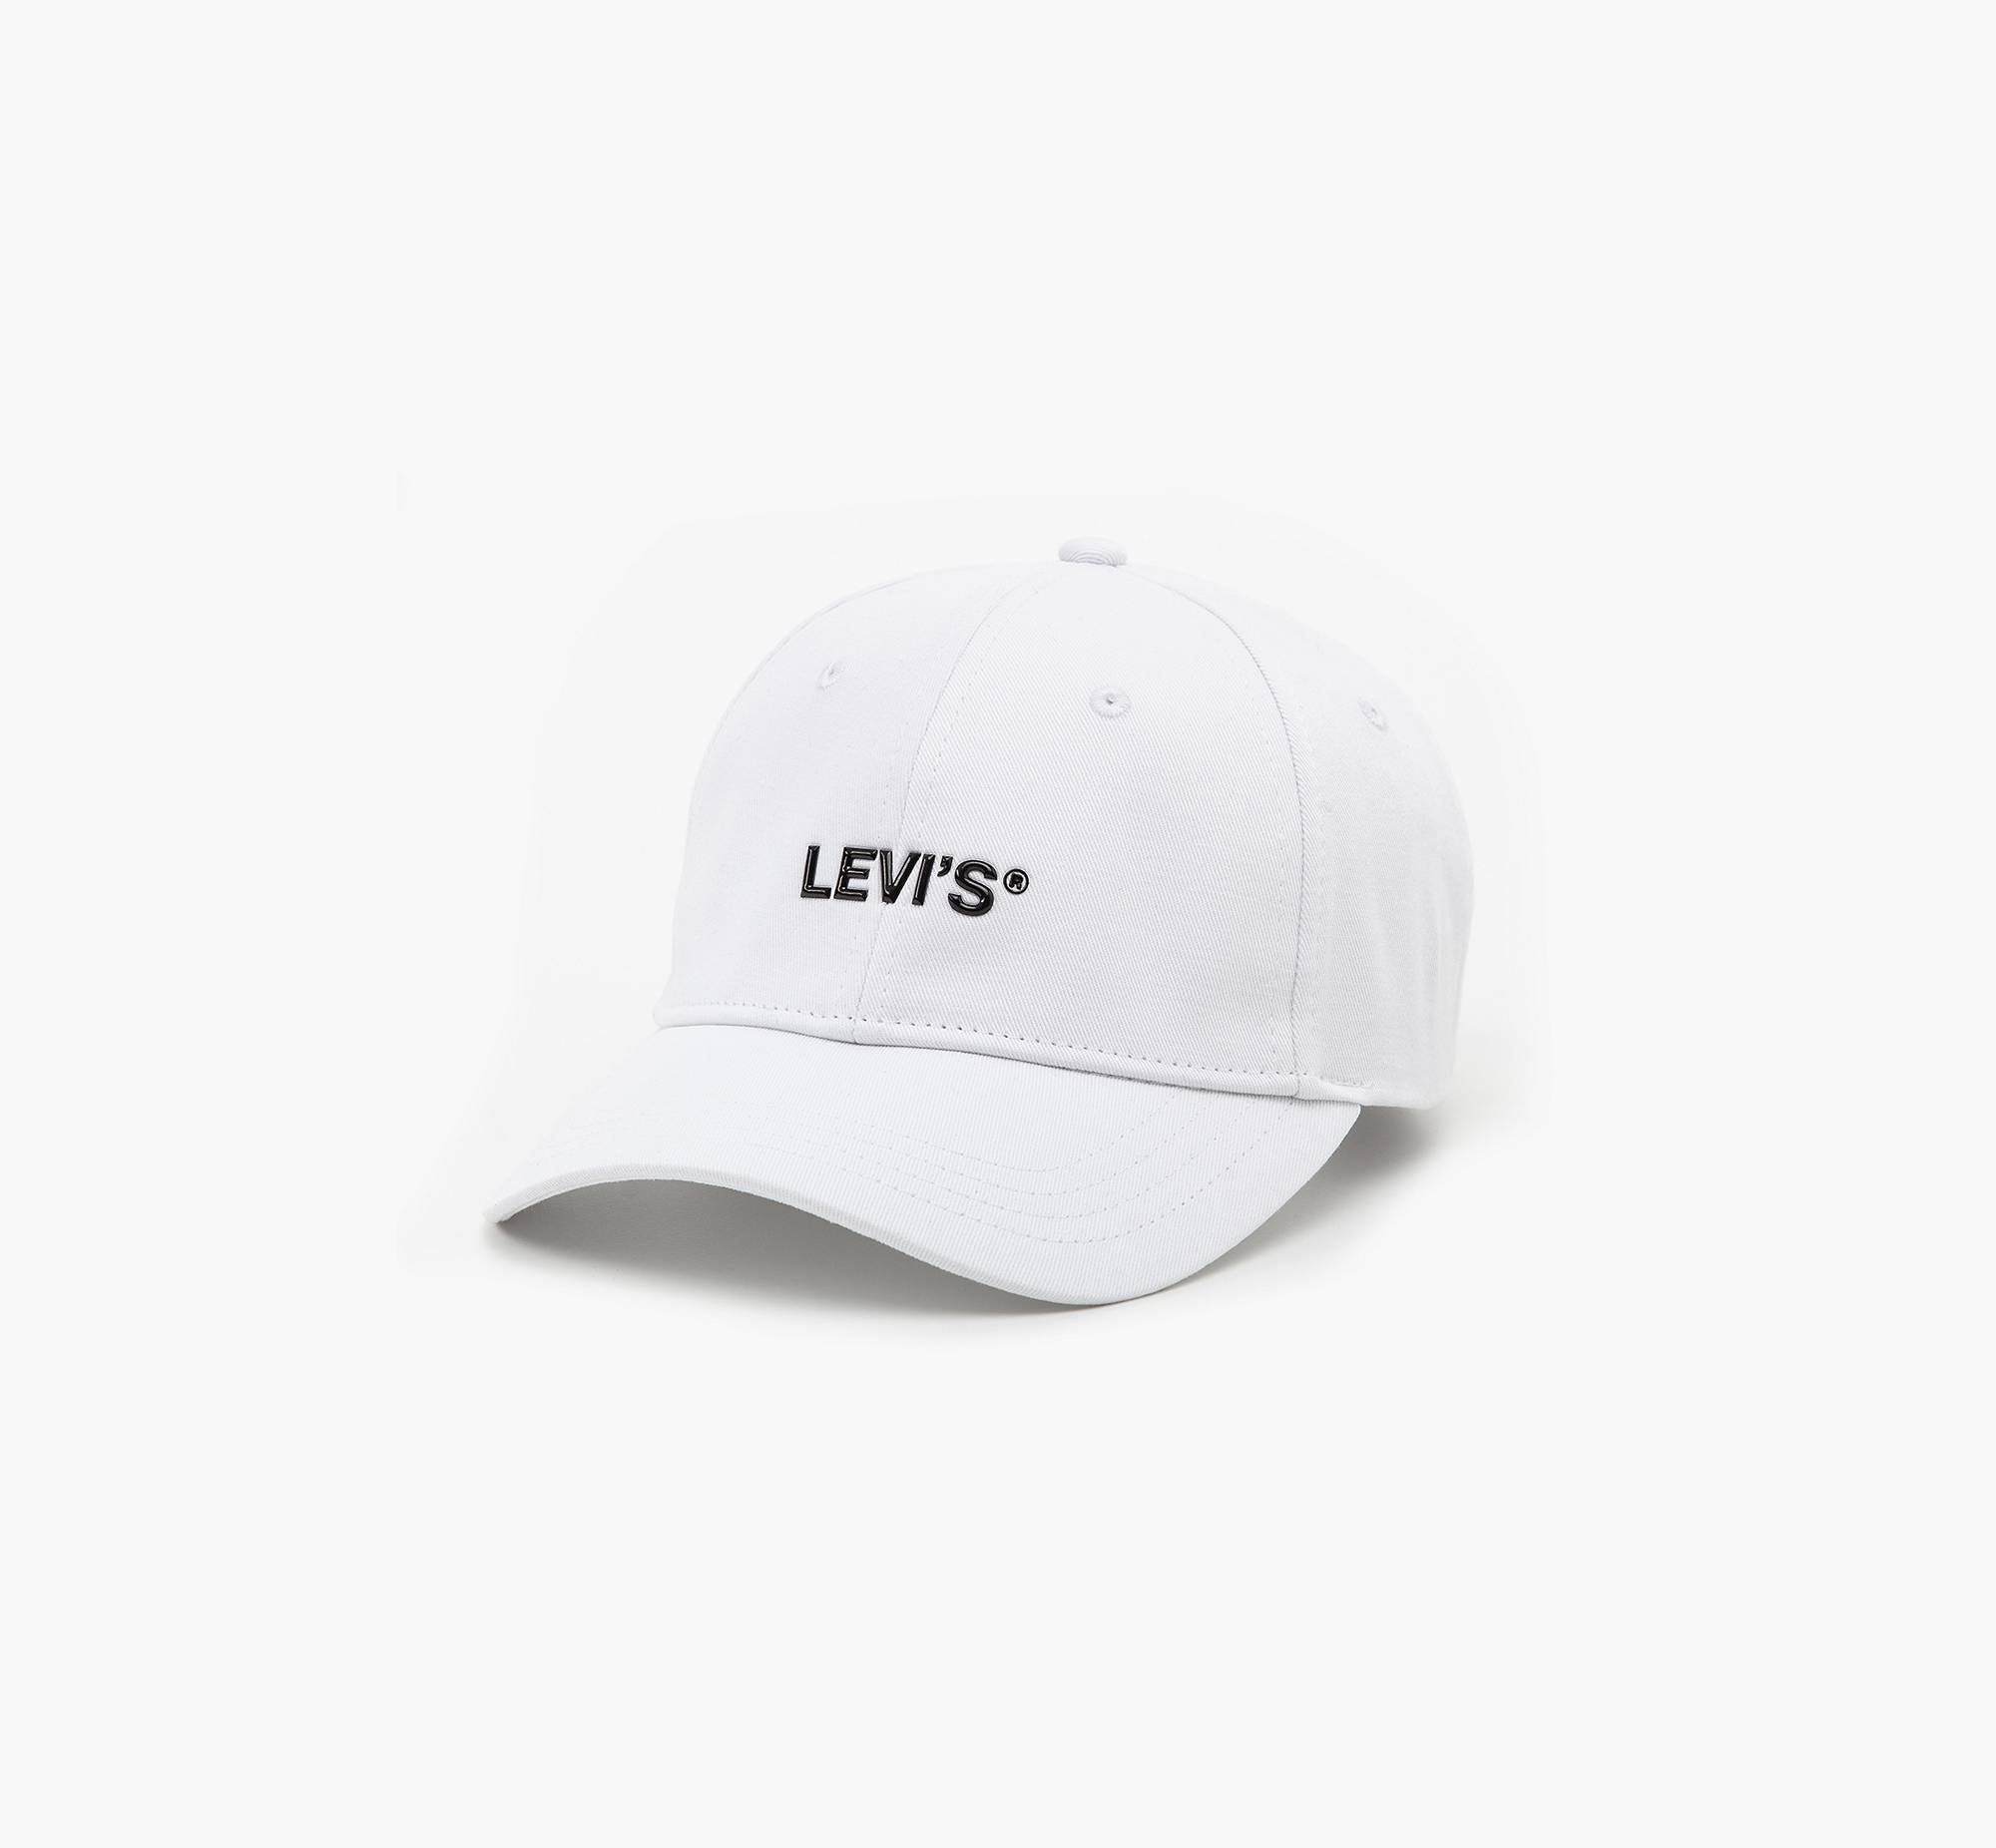 Levis Sport Cap